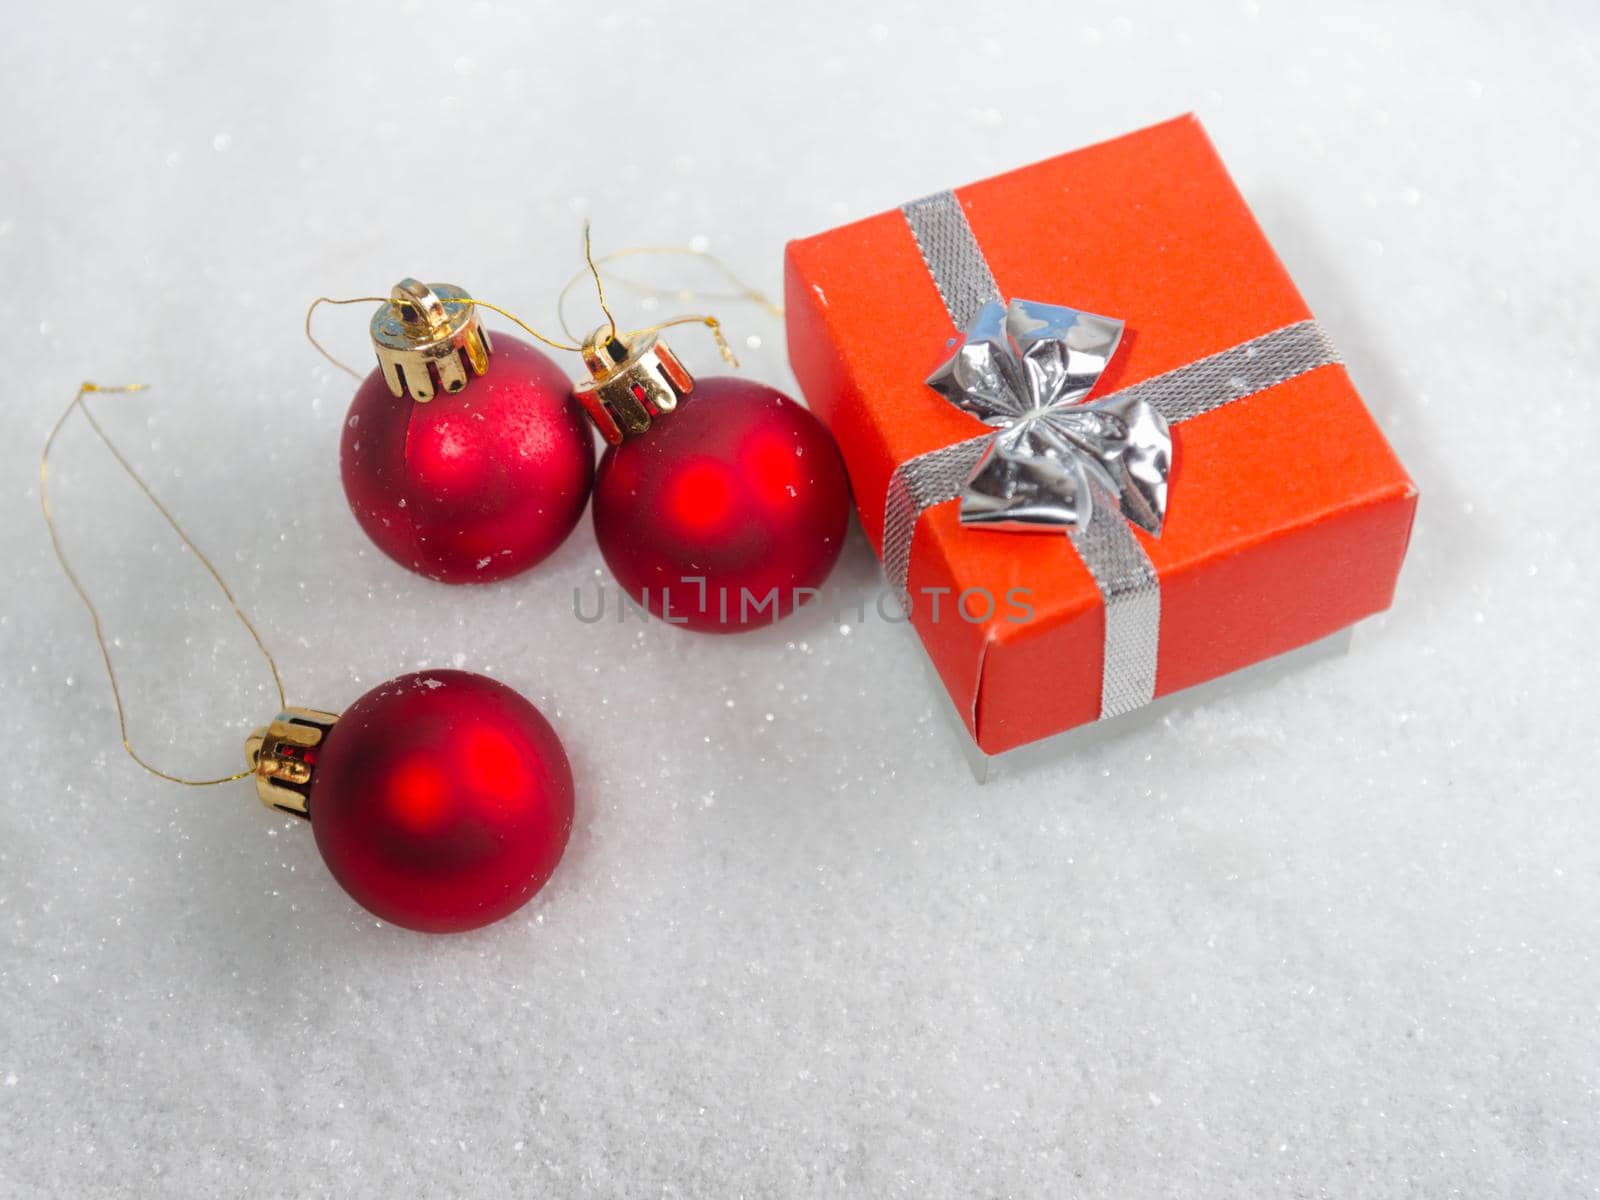 Christmas balls and gift by alexAleksei